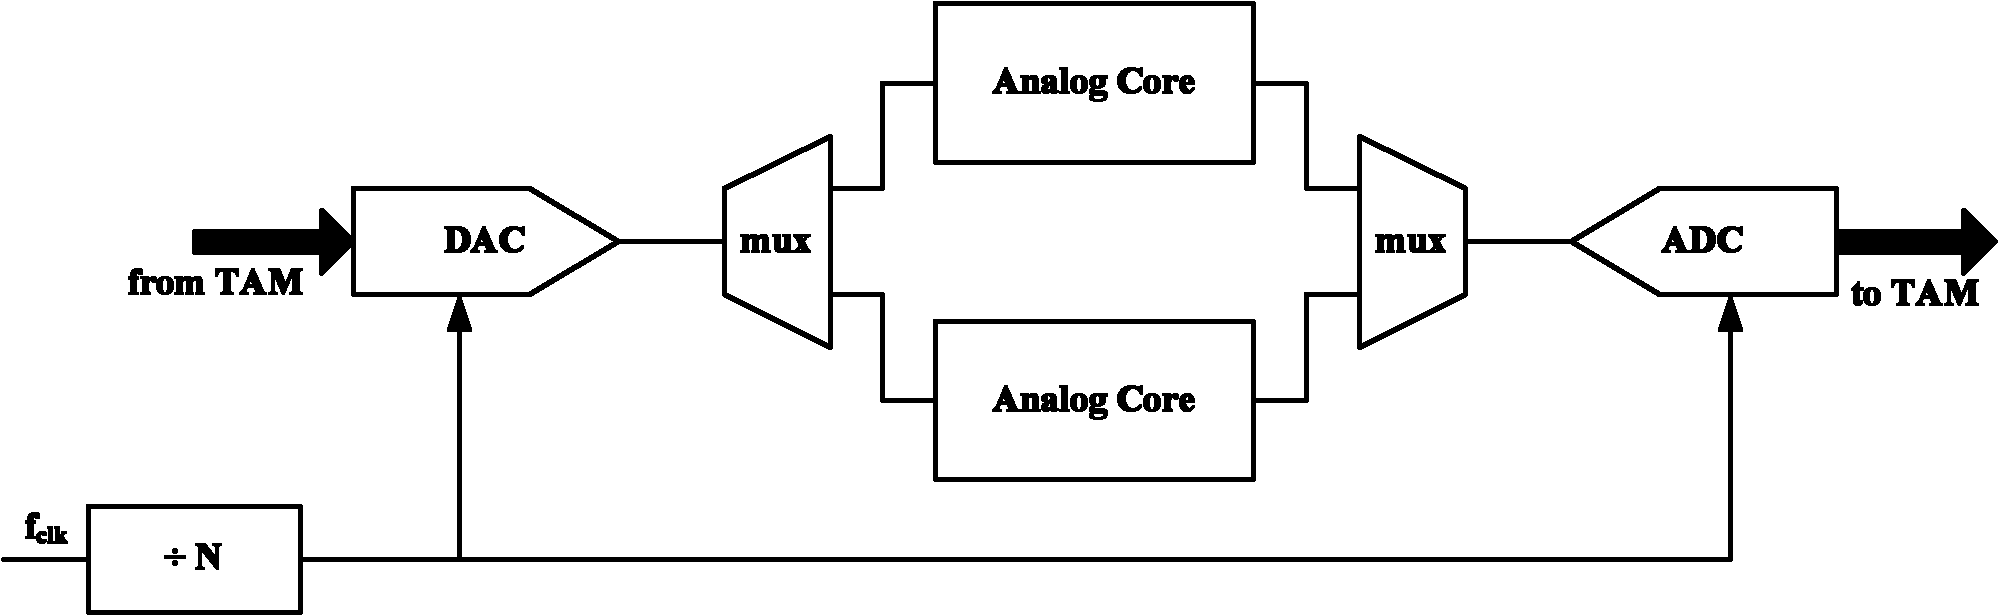 Self-holding analog core testing shell